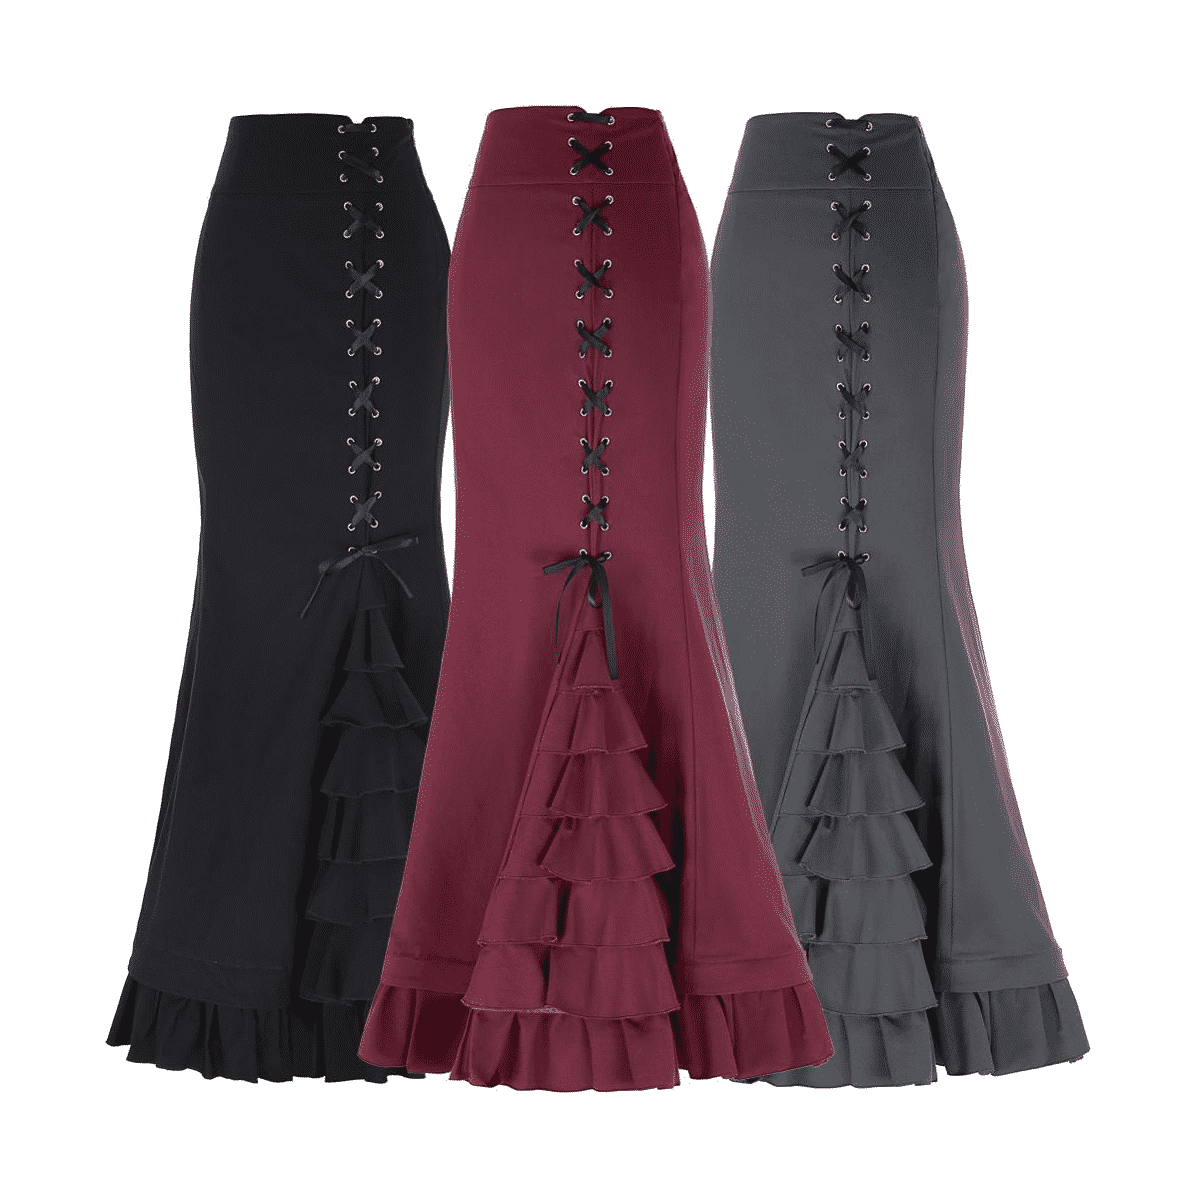 Steampunk Gothic Vintage Skirt - The Black Ravens